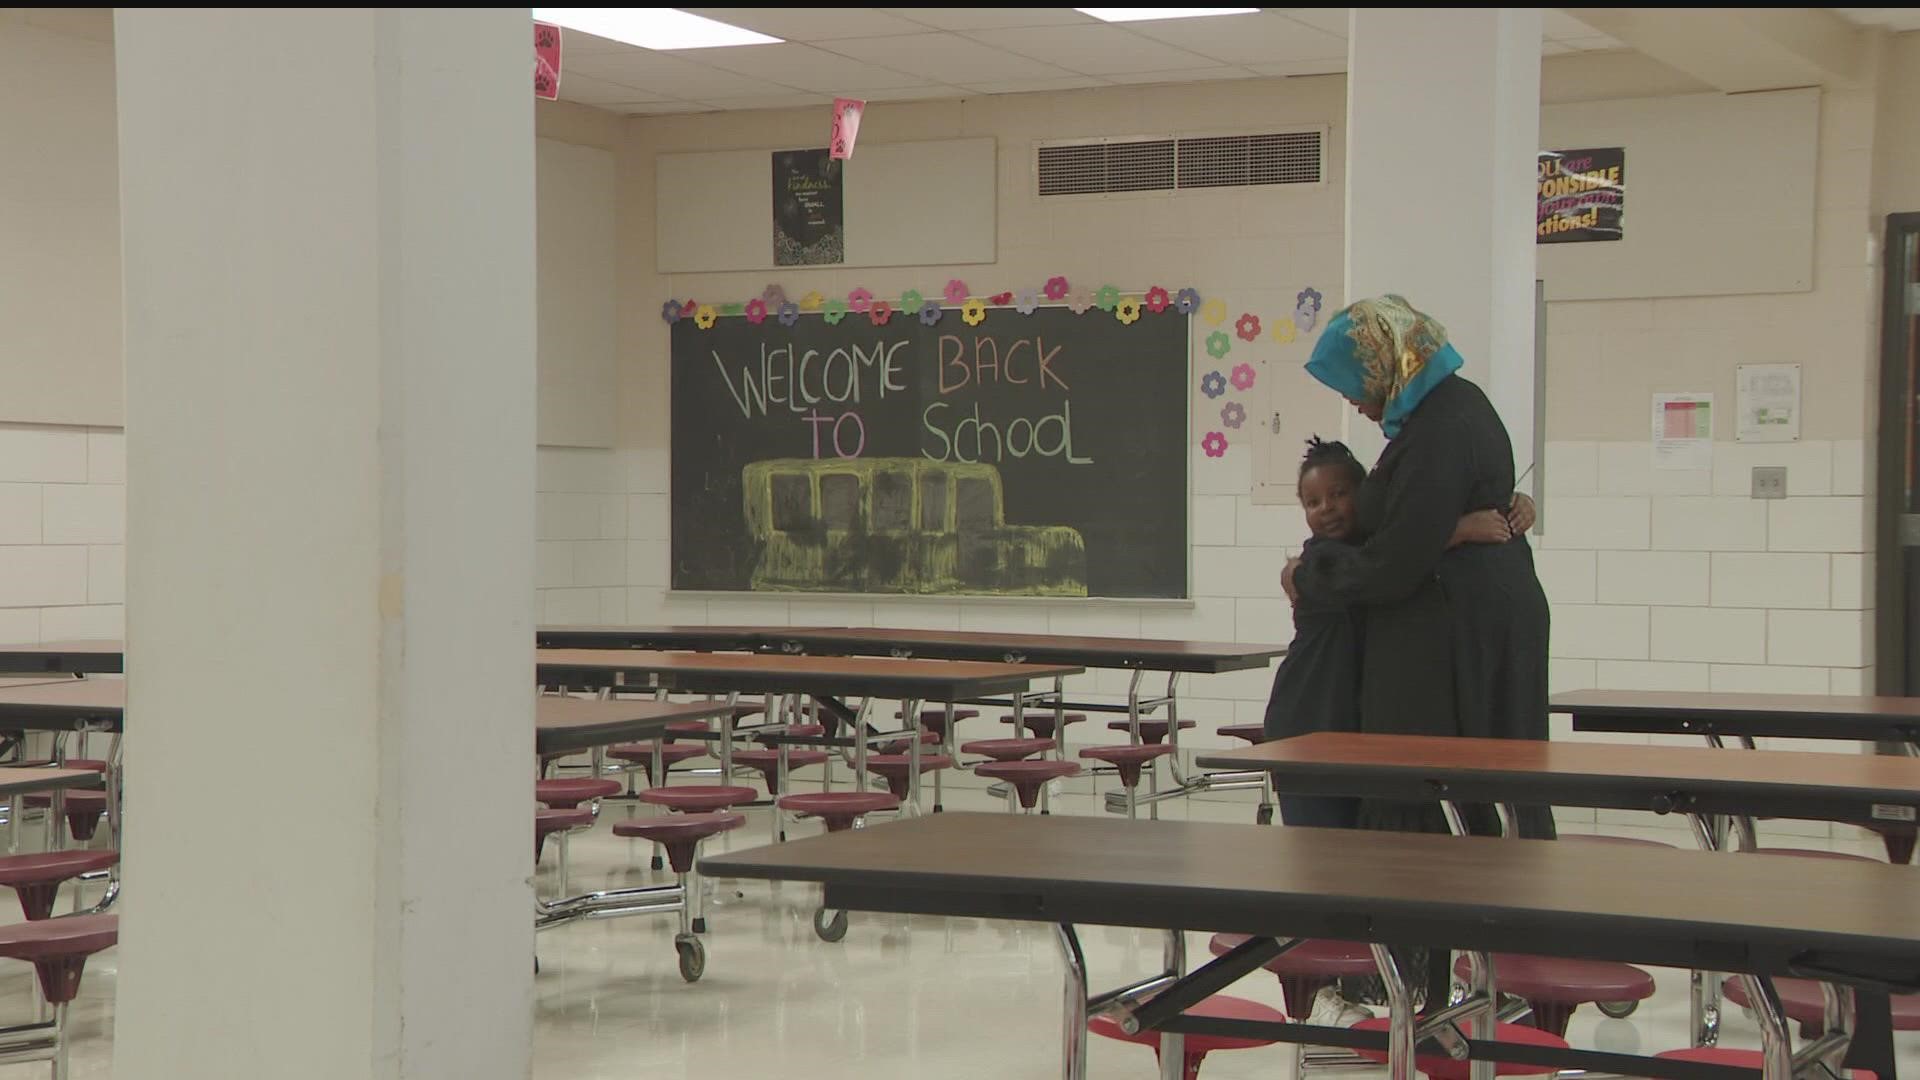 Gideon Pond Elementary School's Somali students make up 40% of its population.